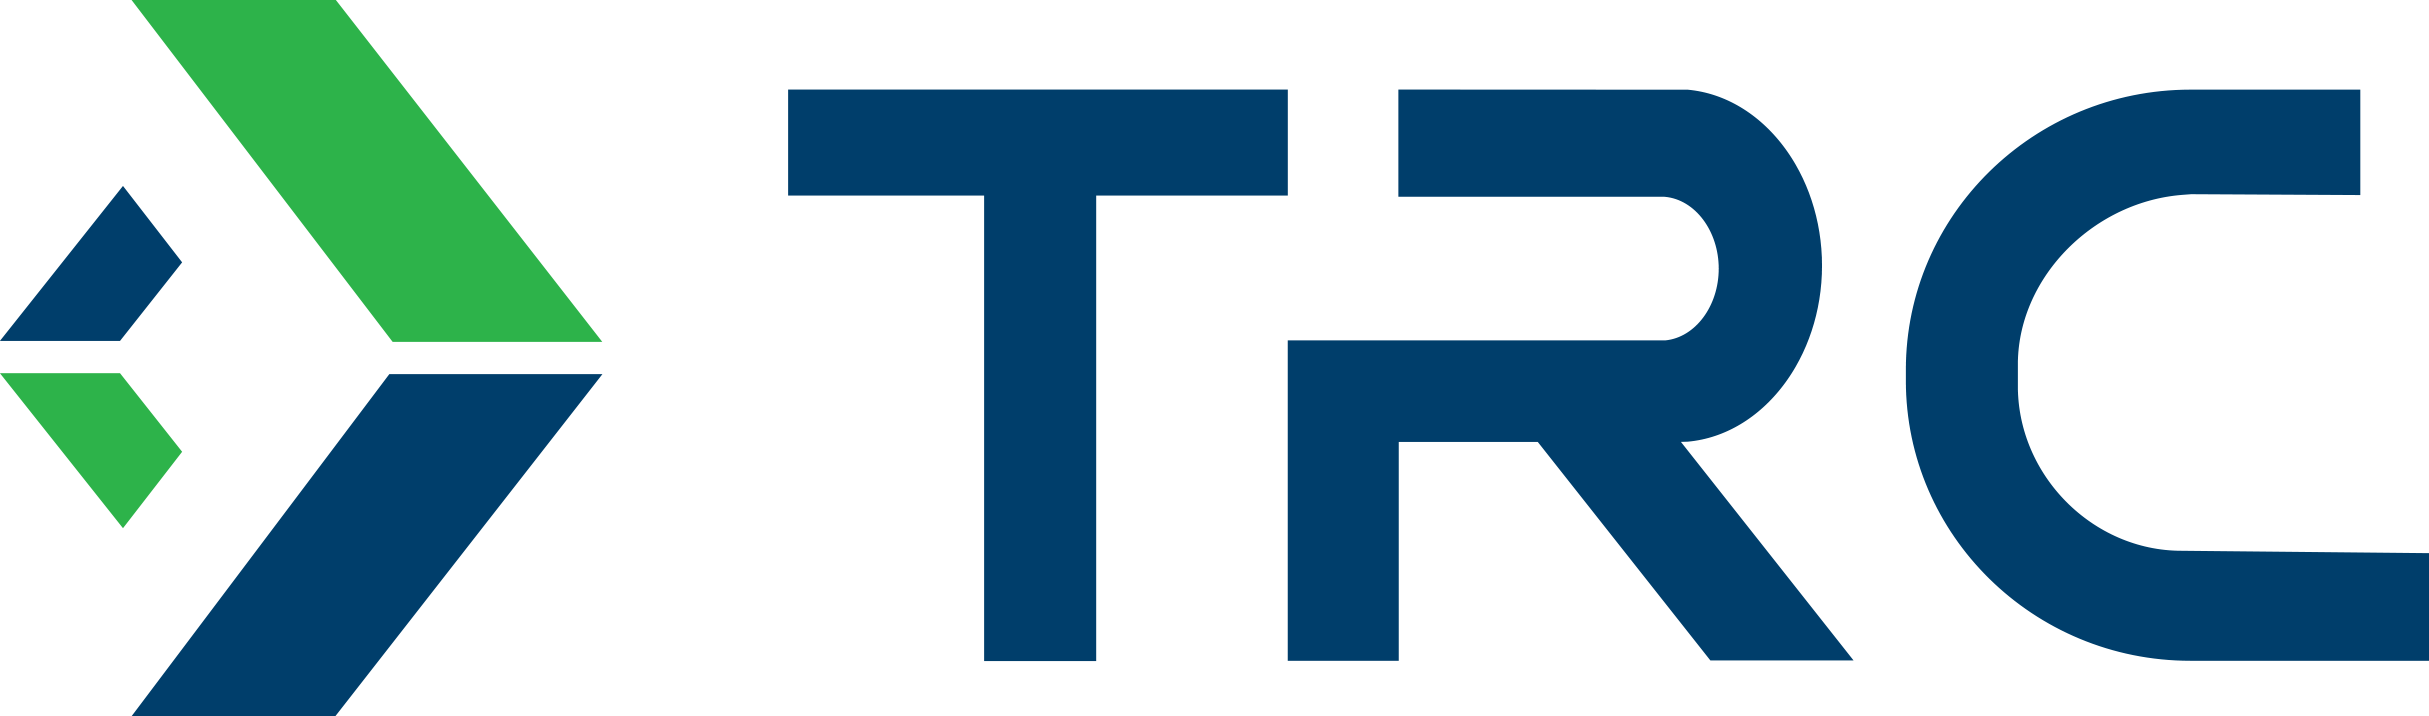 TRC Logo final_Color - Matt Hammer (002).png